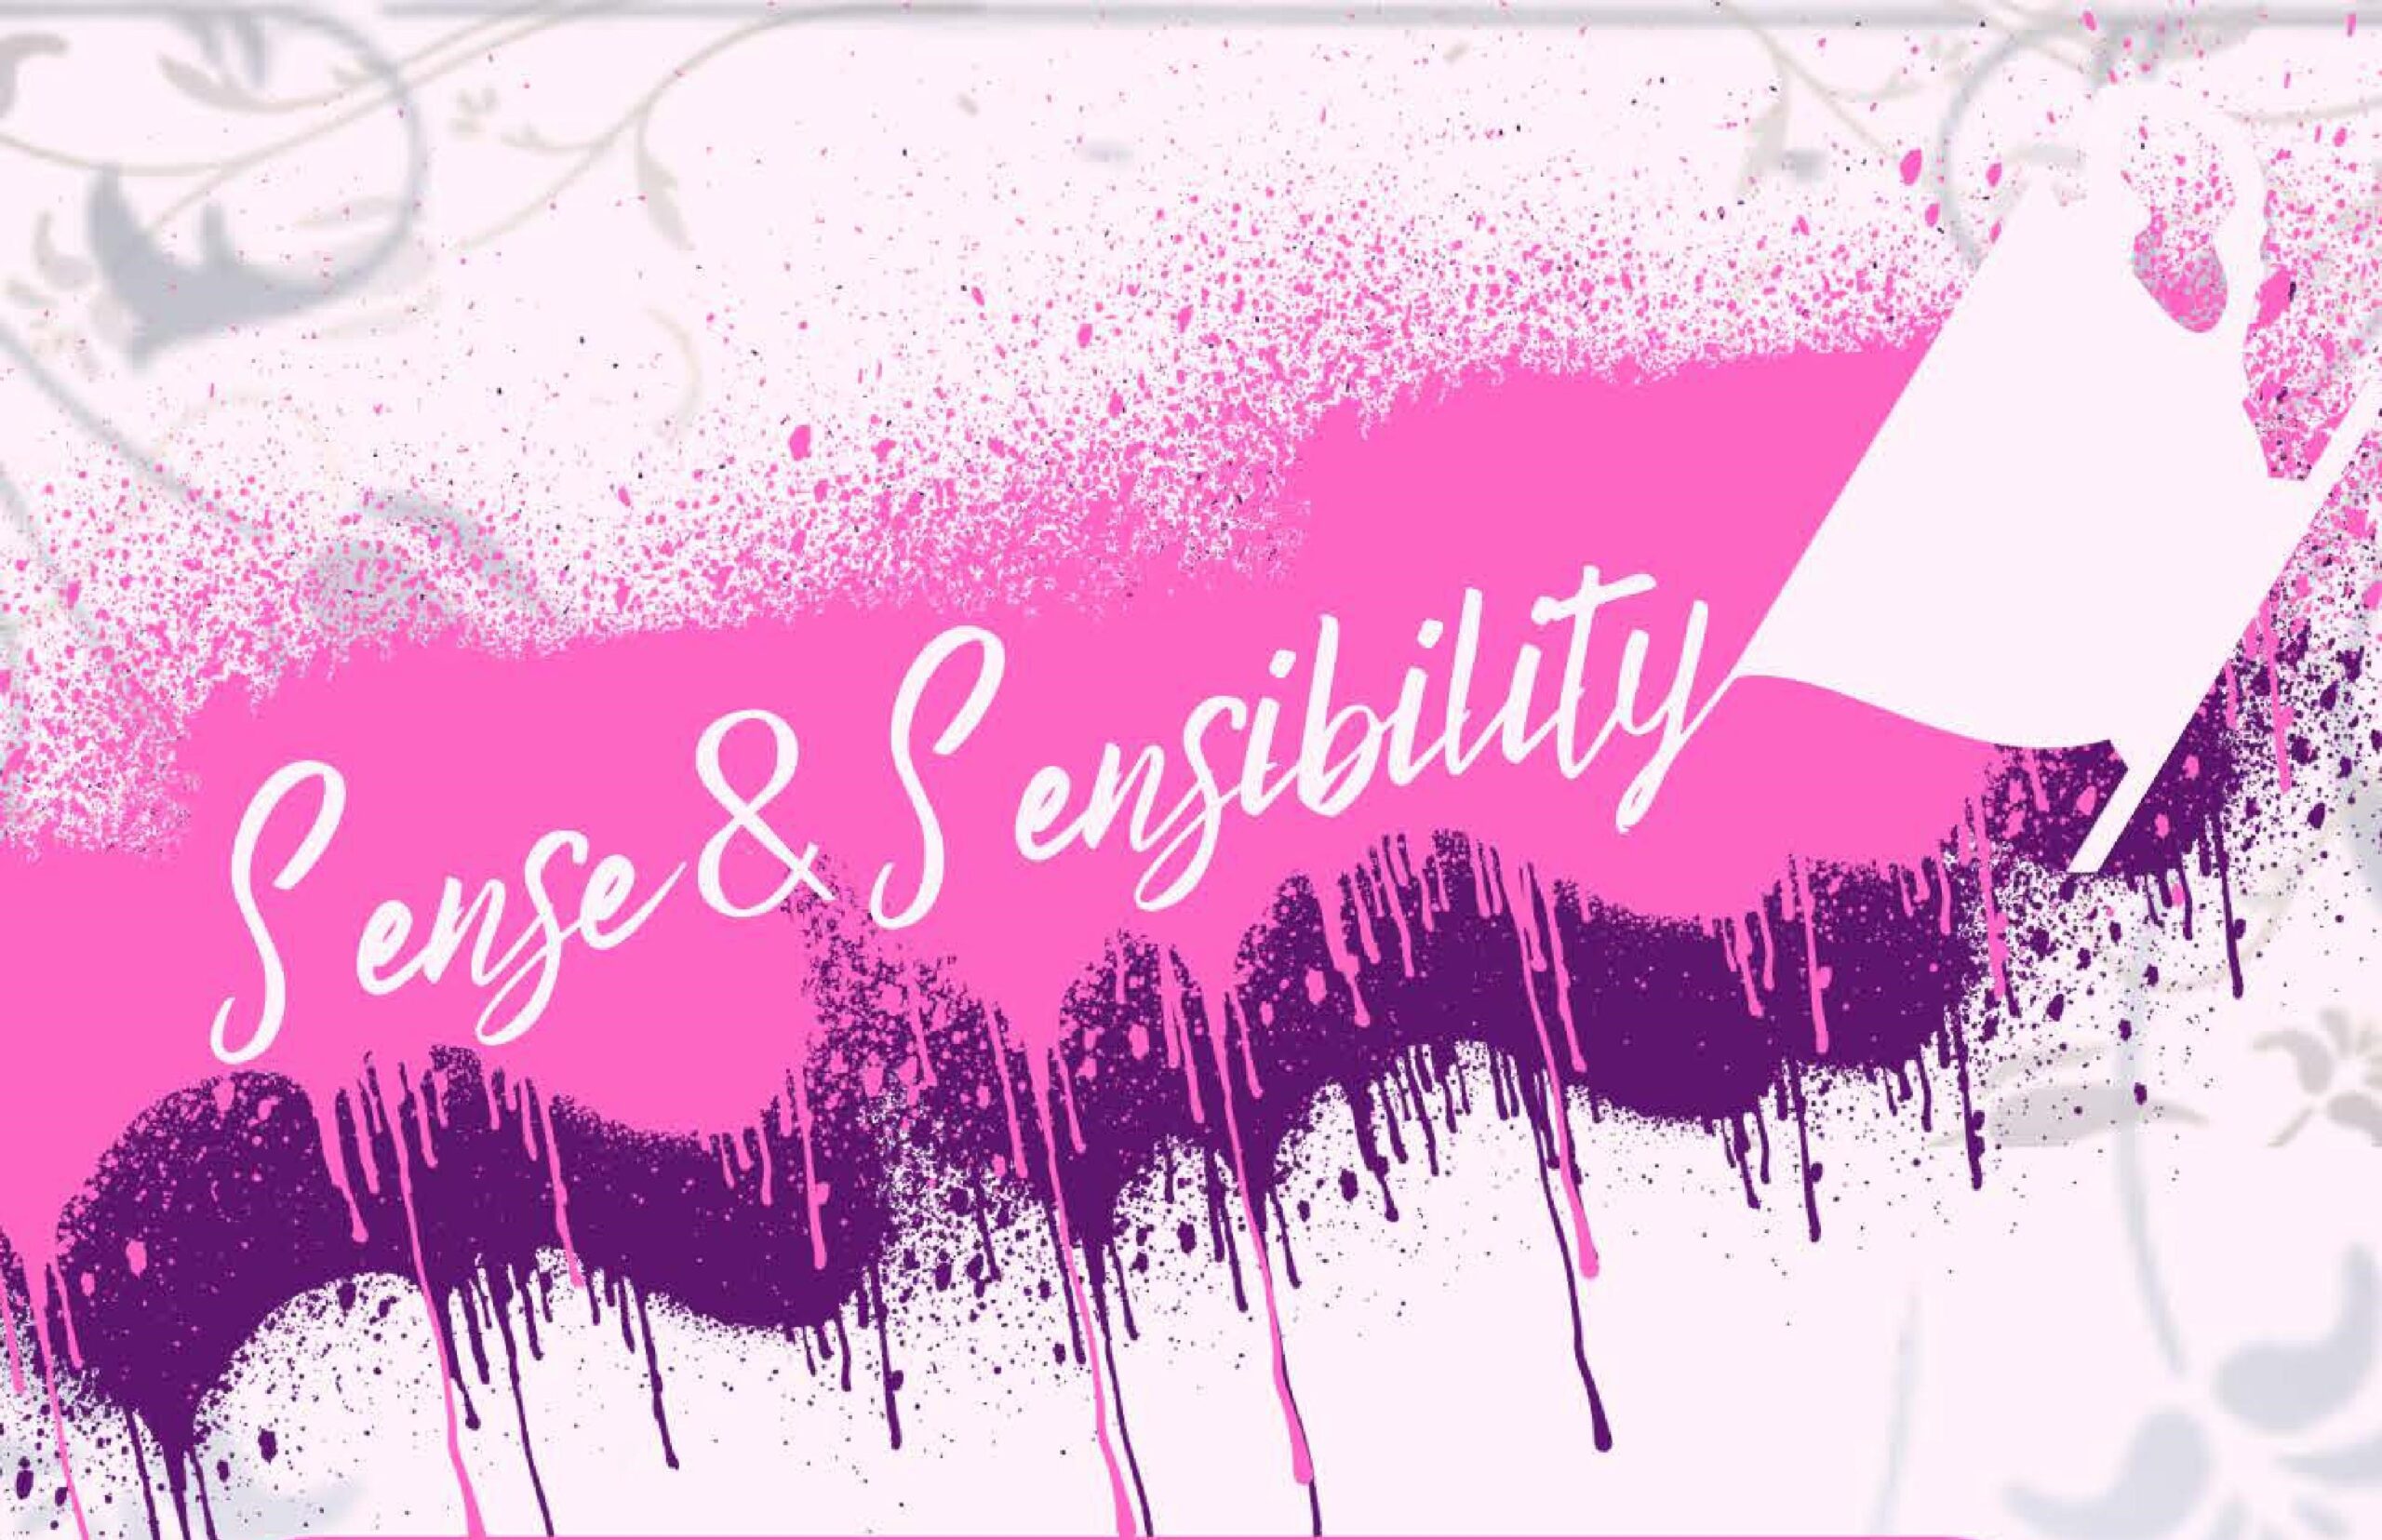 Pink "Sense and Sensibility" poster